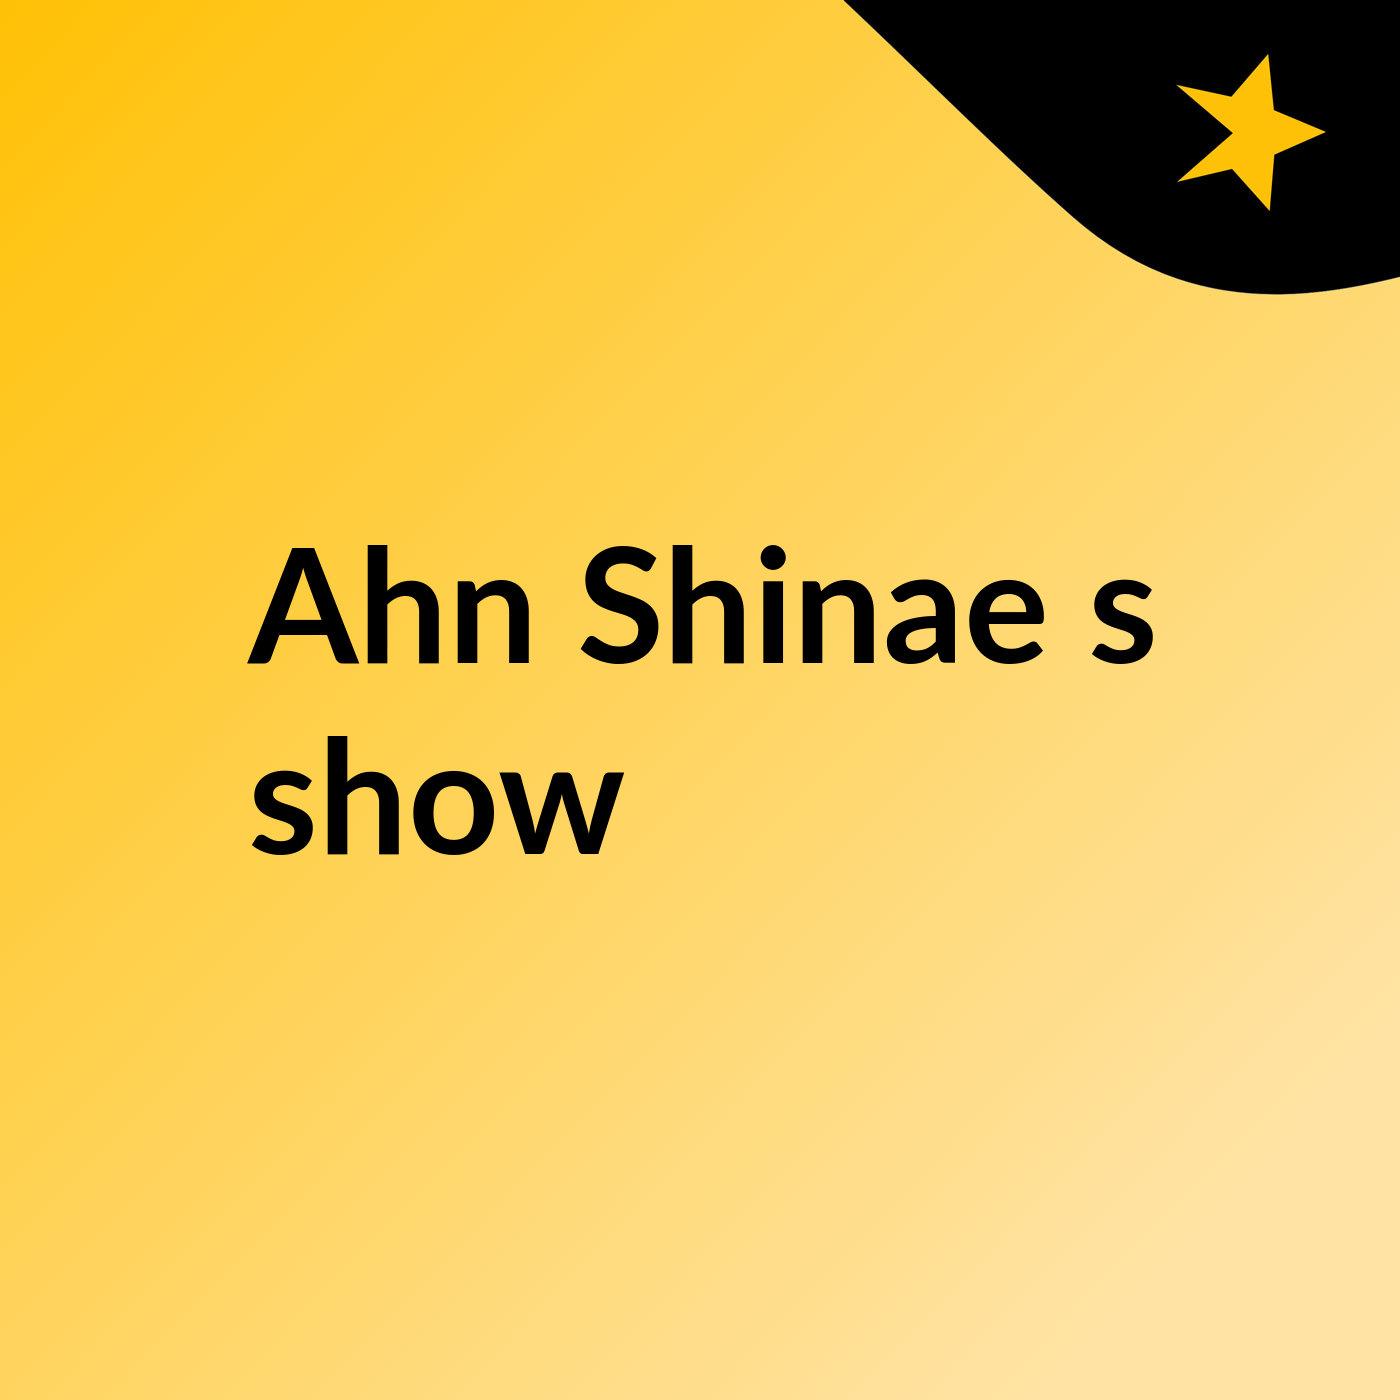 Ahn Shinae's show